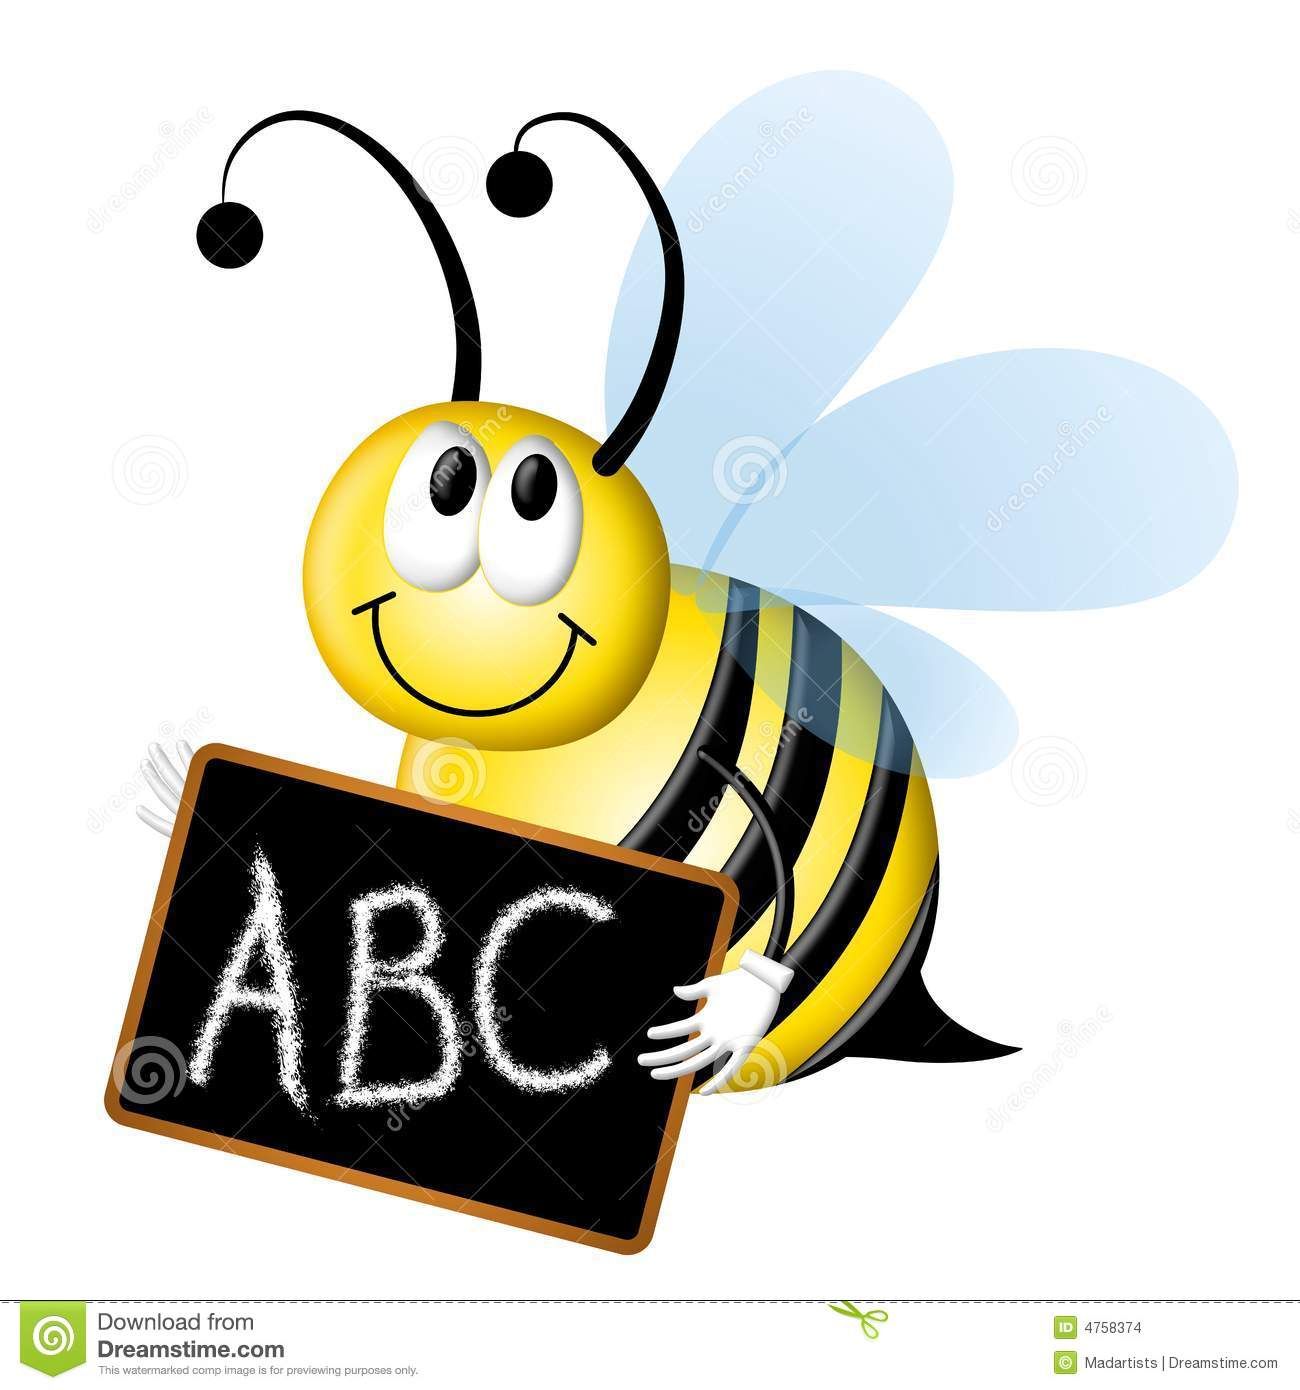 Bumble bee clip art. Spelling clipart spelling quiz